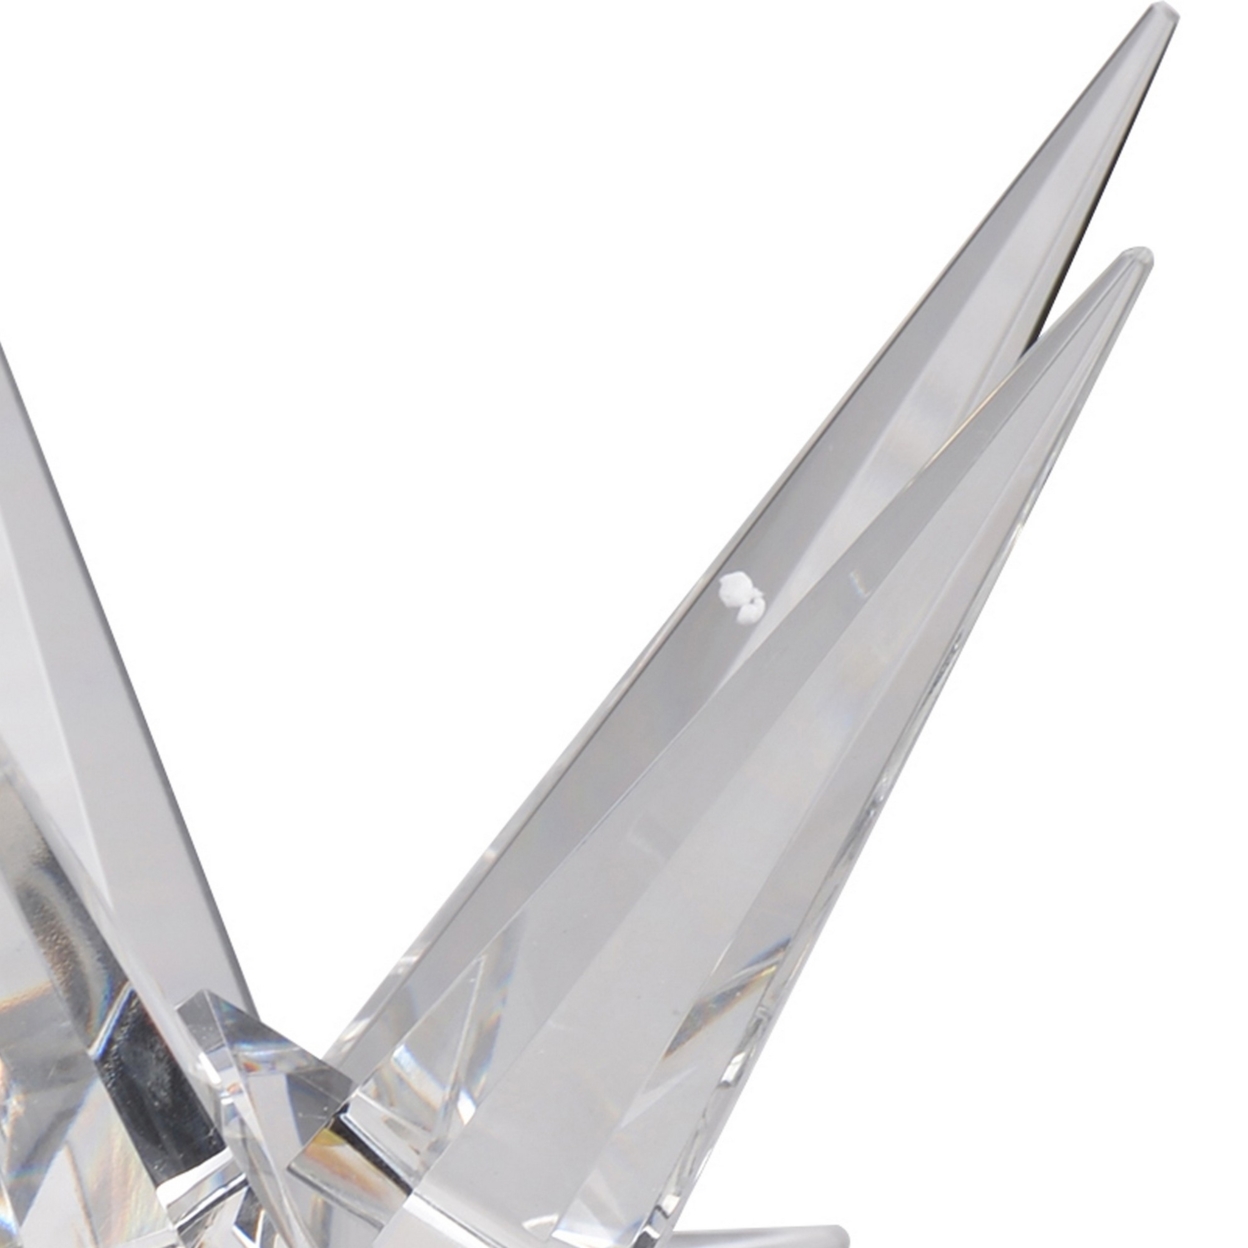 10 Inch Glass Star Accent Decor For Tabletop, Elegant Clear Crystalline- Saltoro Sherpi